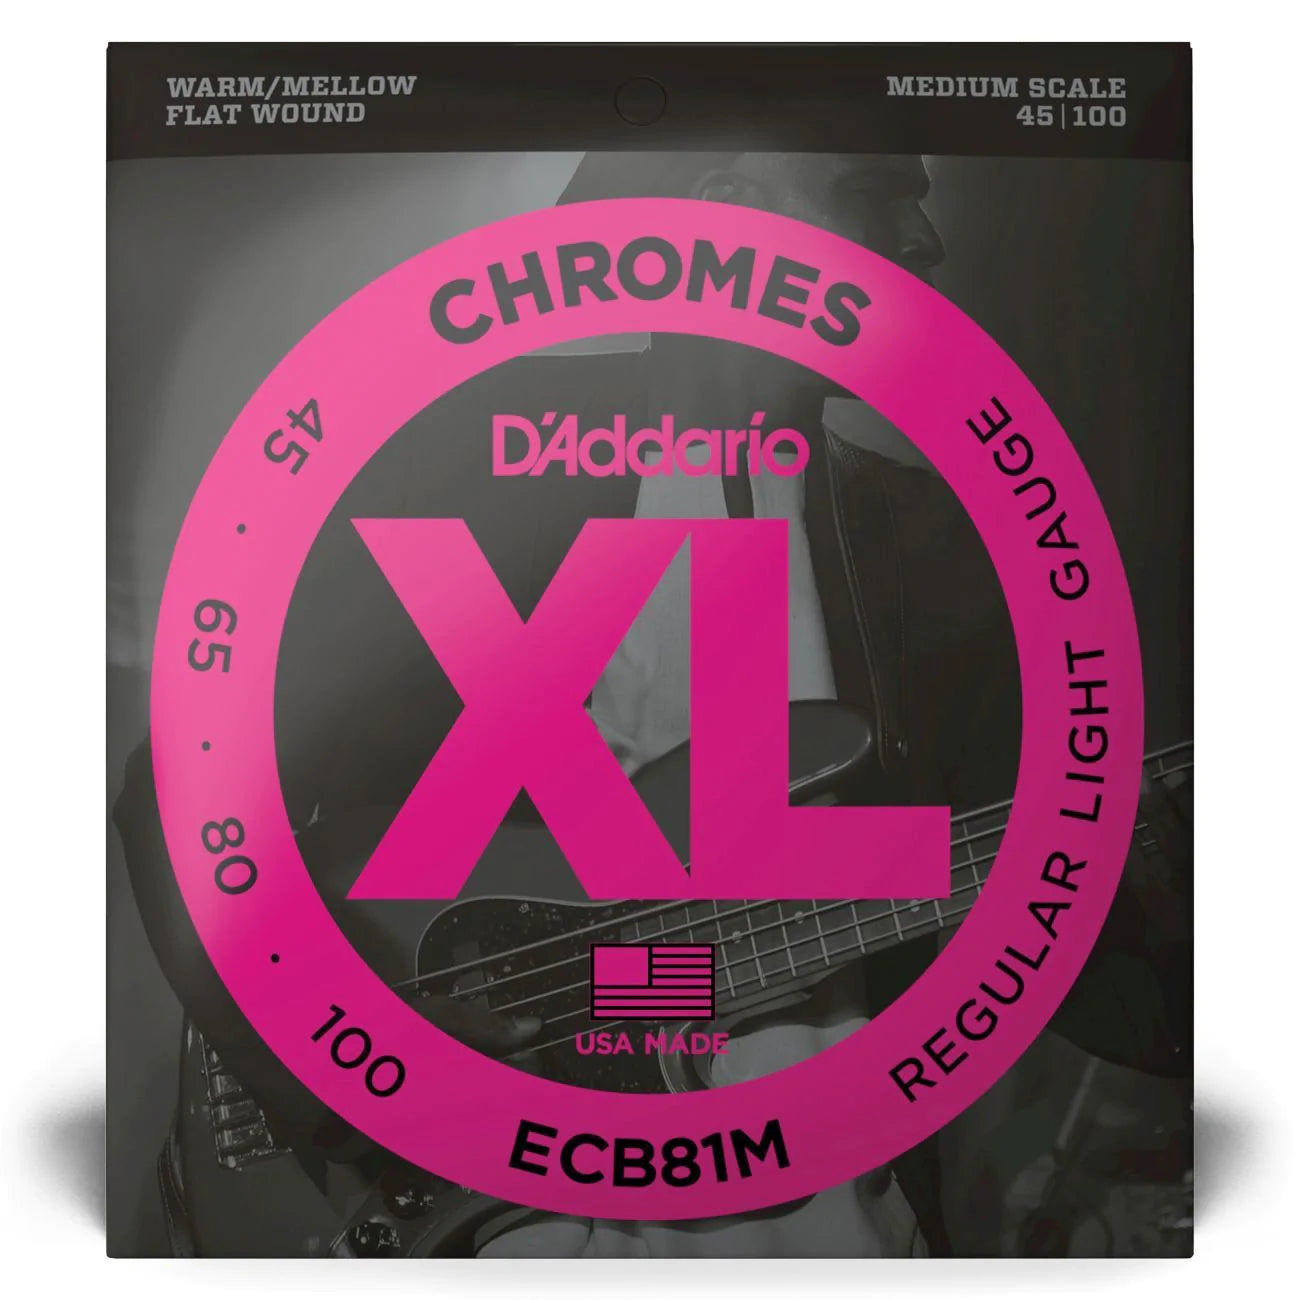 D'Addario ECB81M | Chromes Flatwound Bass Strings 45-100 Gauge | Regular Light | Medium Scale